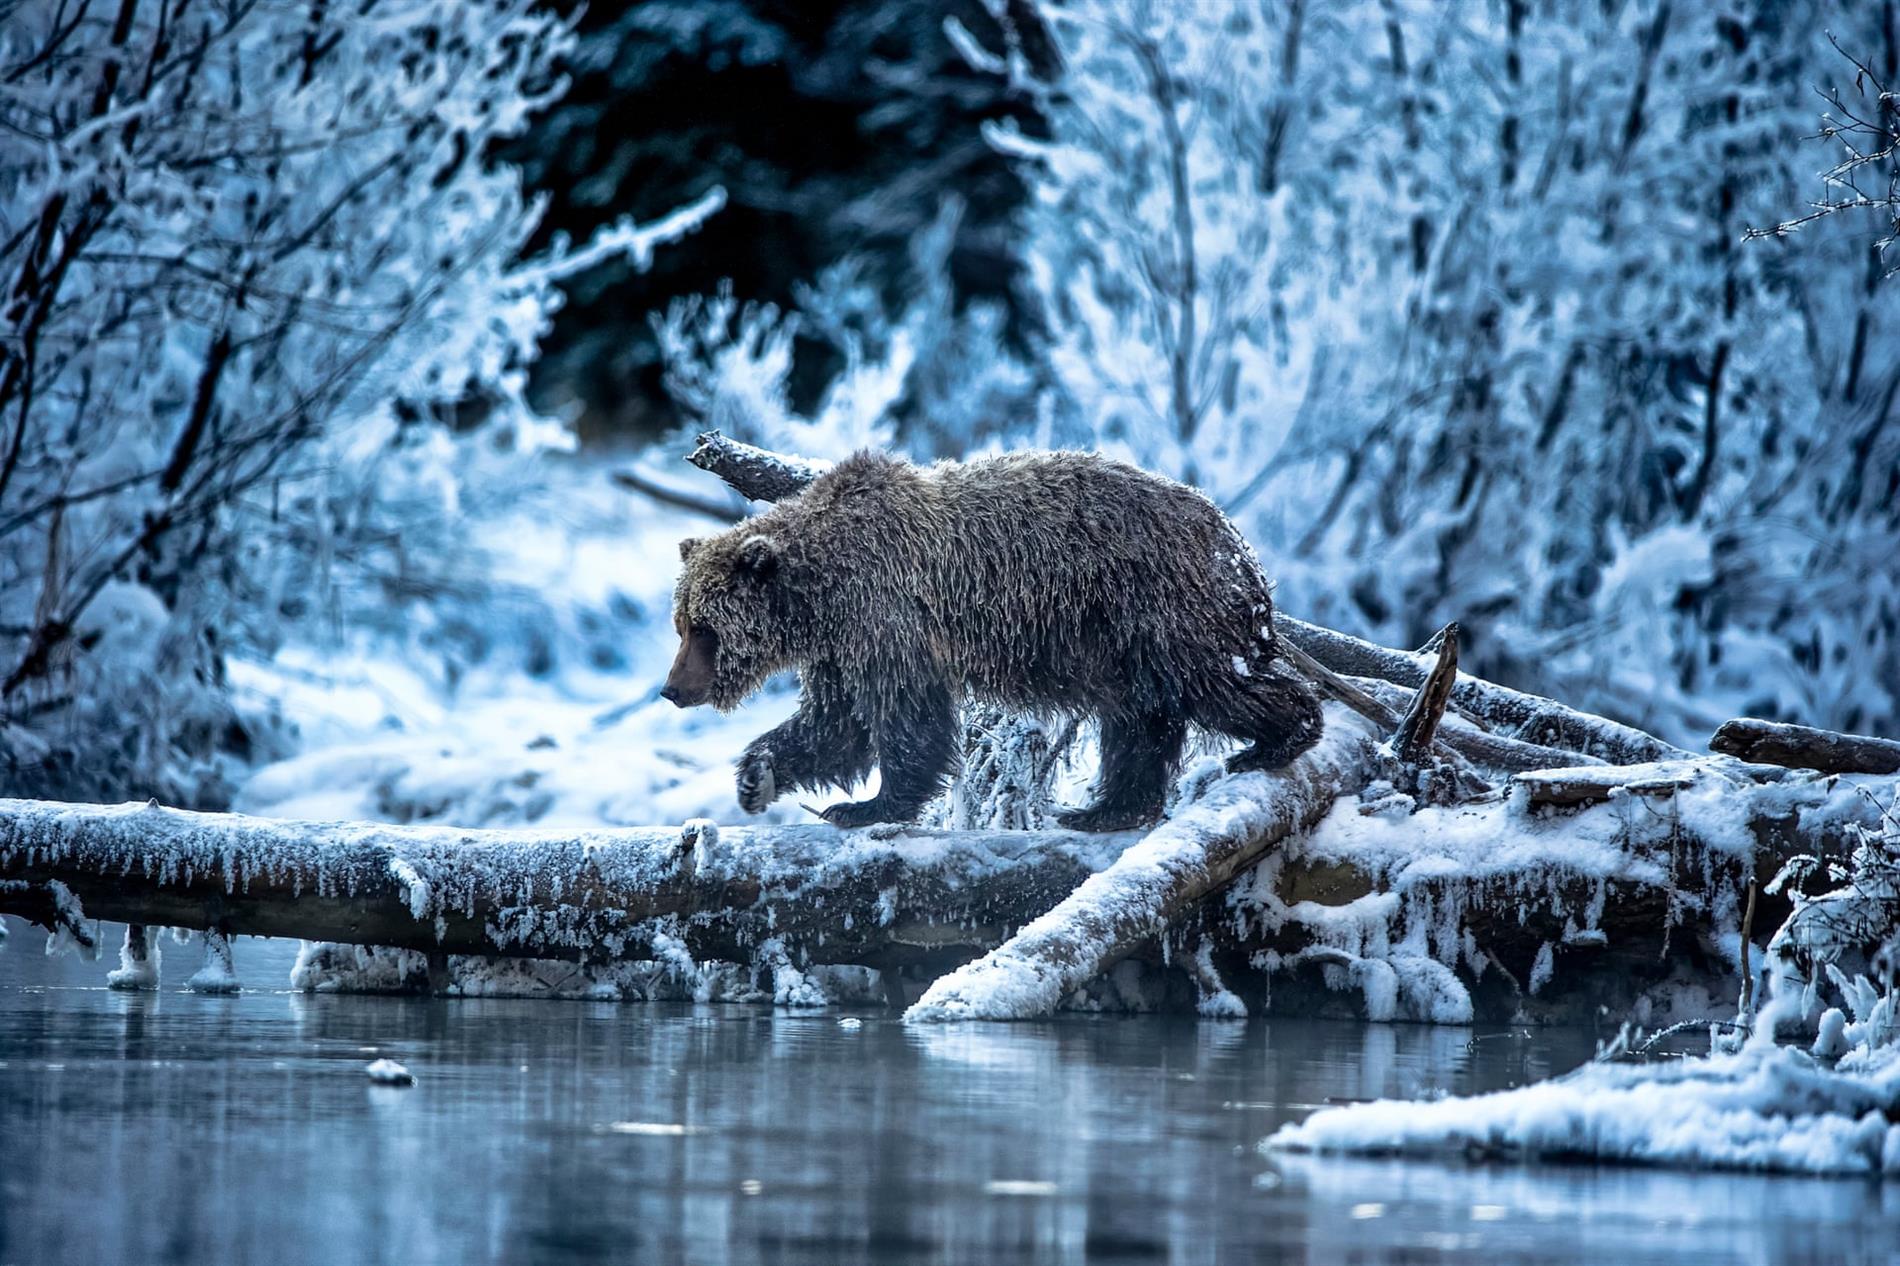 Wildlife Photographer of the Year: Σπάνιες φωτογραφίες άγριων ζώων που κόβουν την ανάσα - Οι 25 φιναλίστ